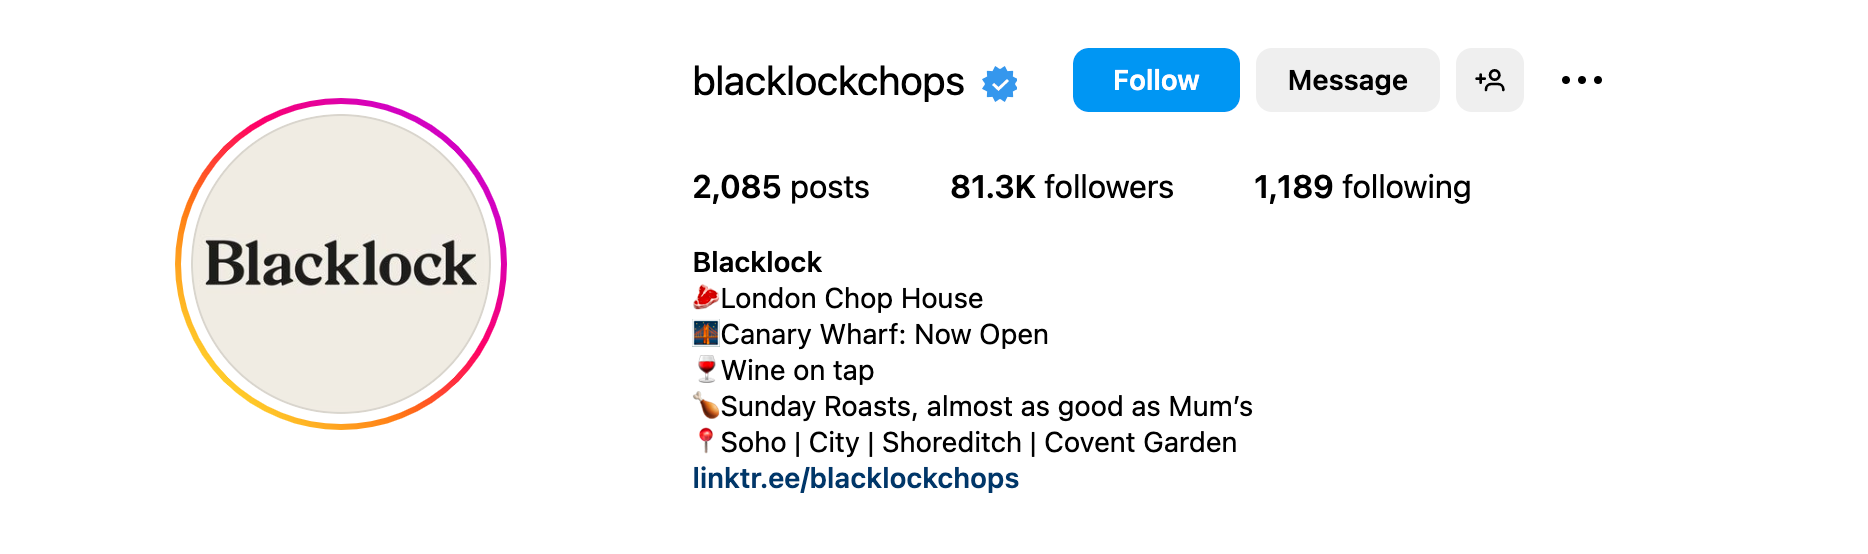 Instagram bio ideas - Blacklock